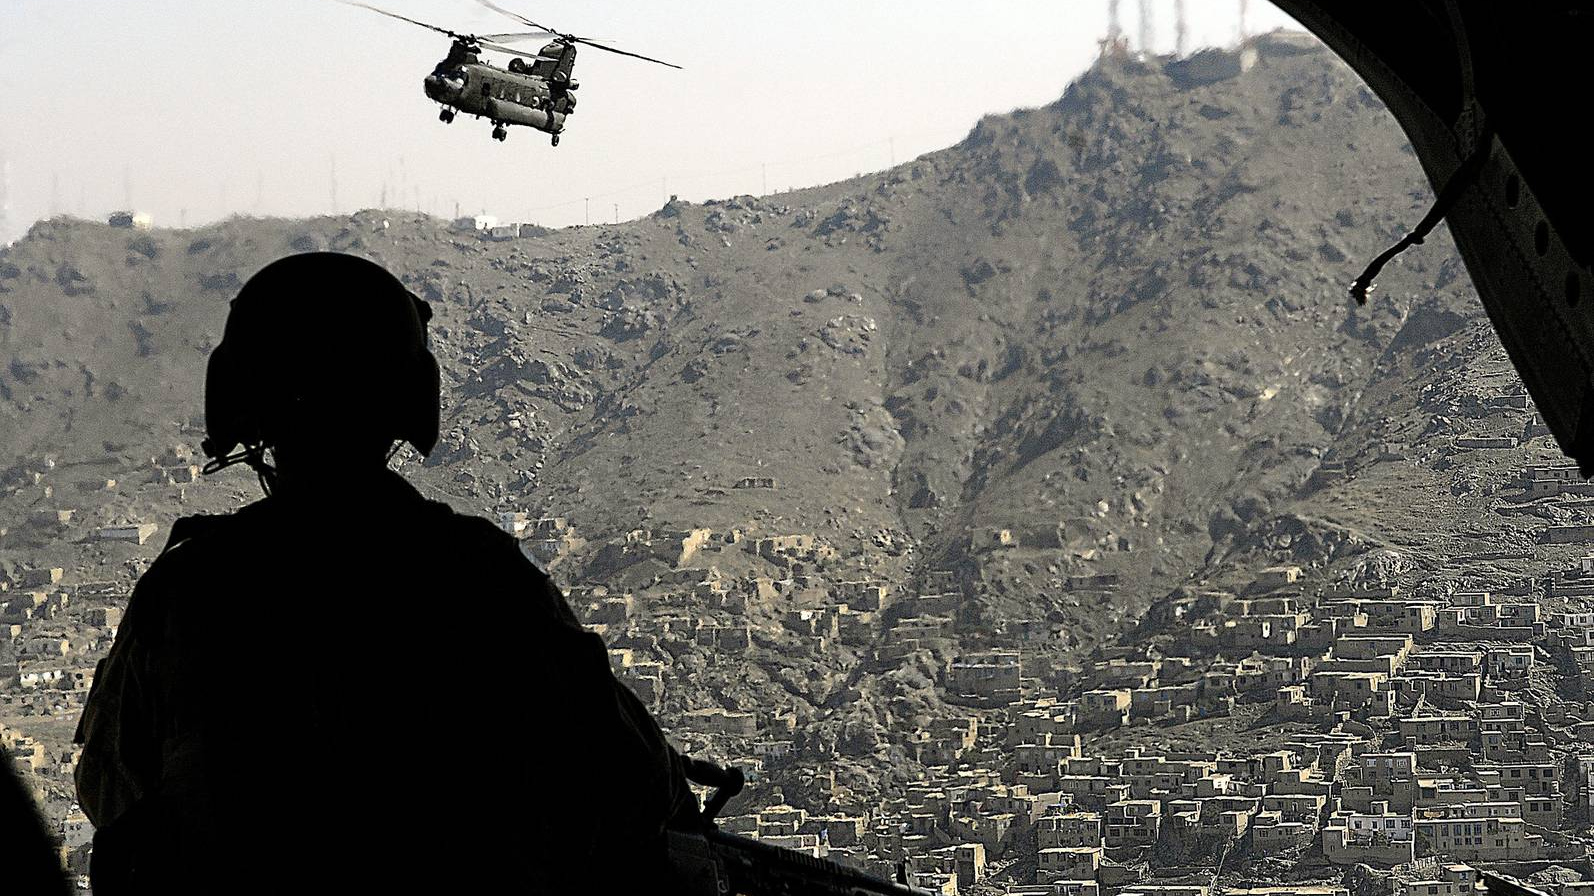 Американцы в Афганистане